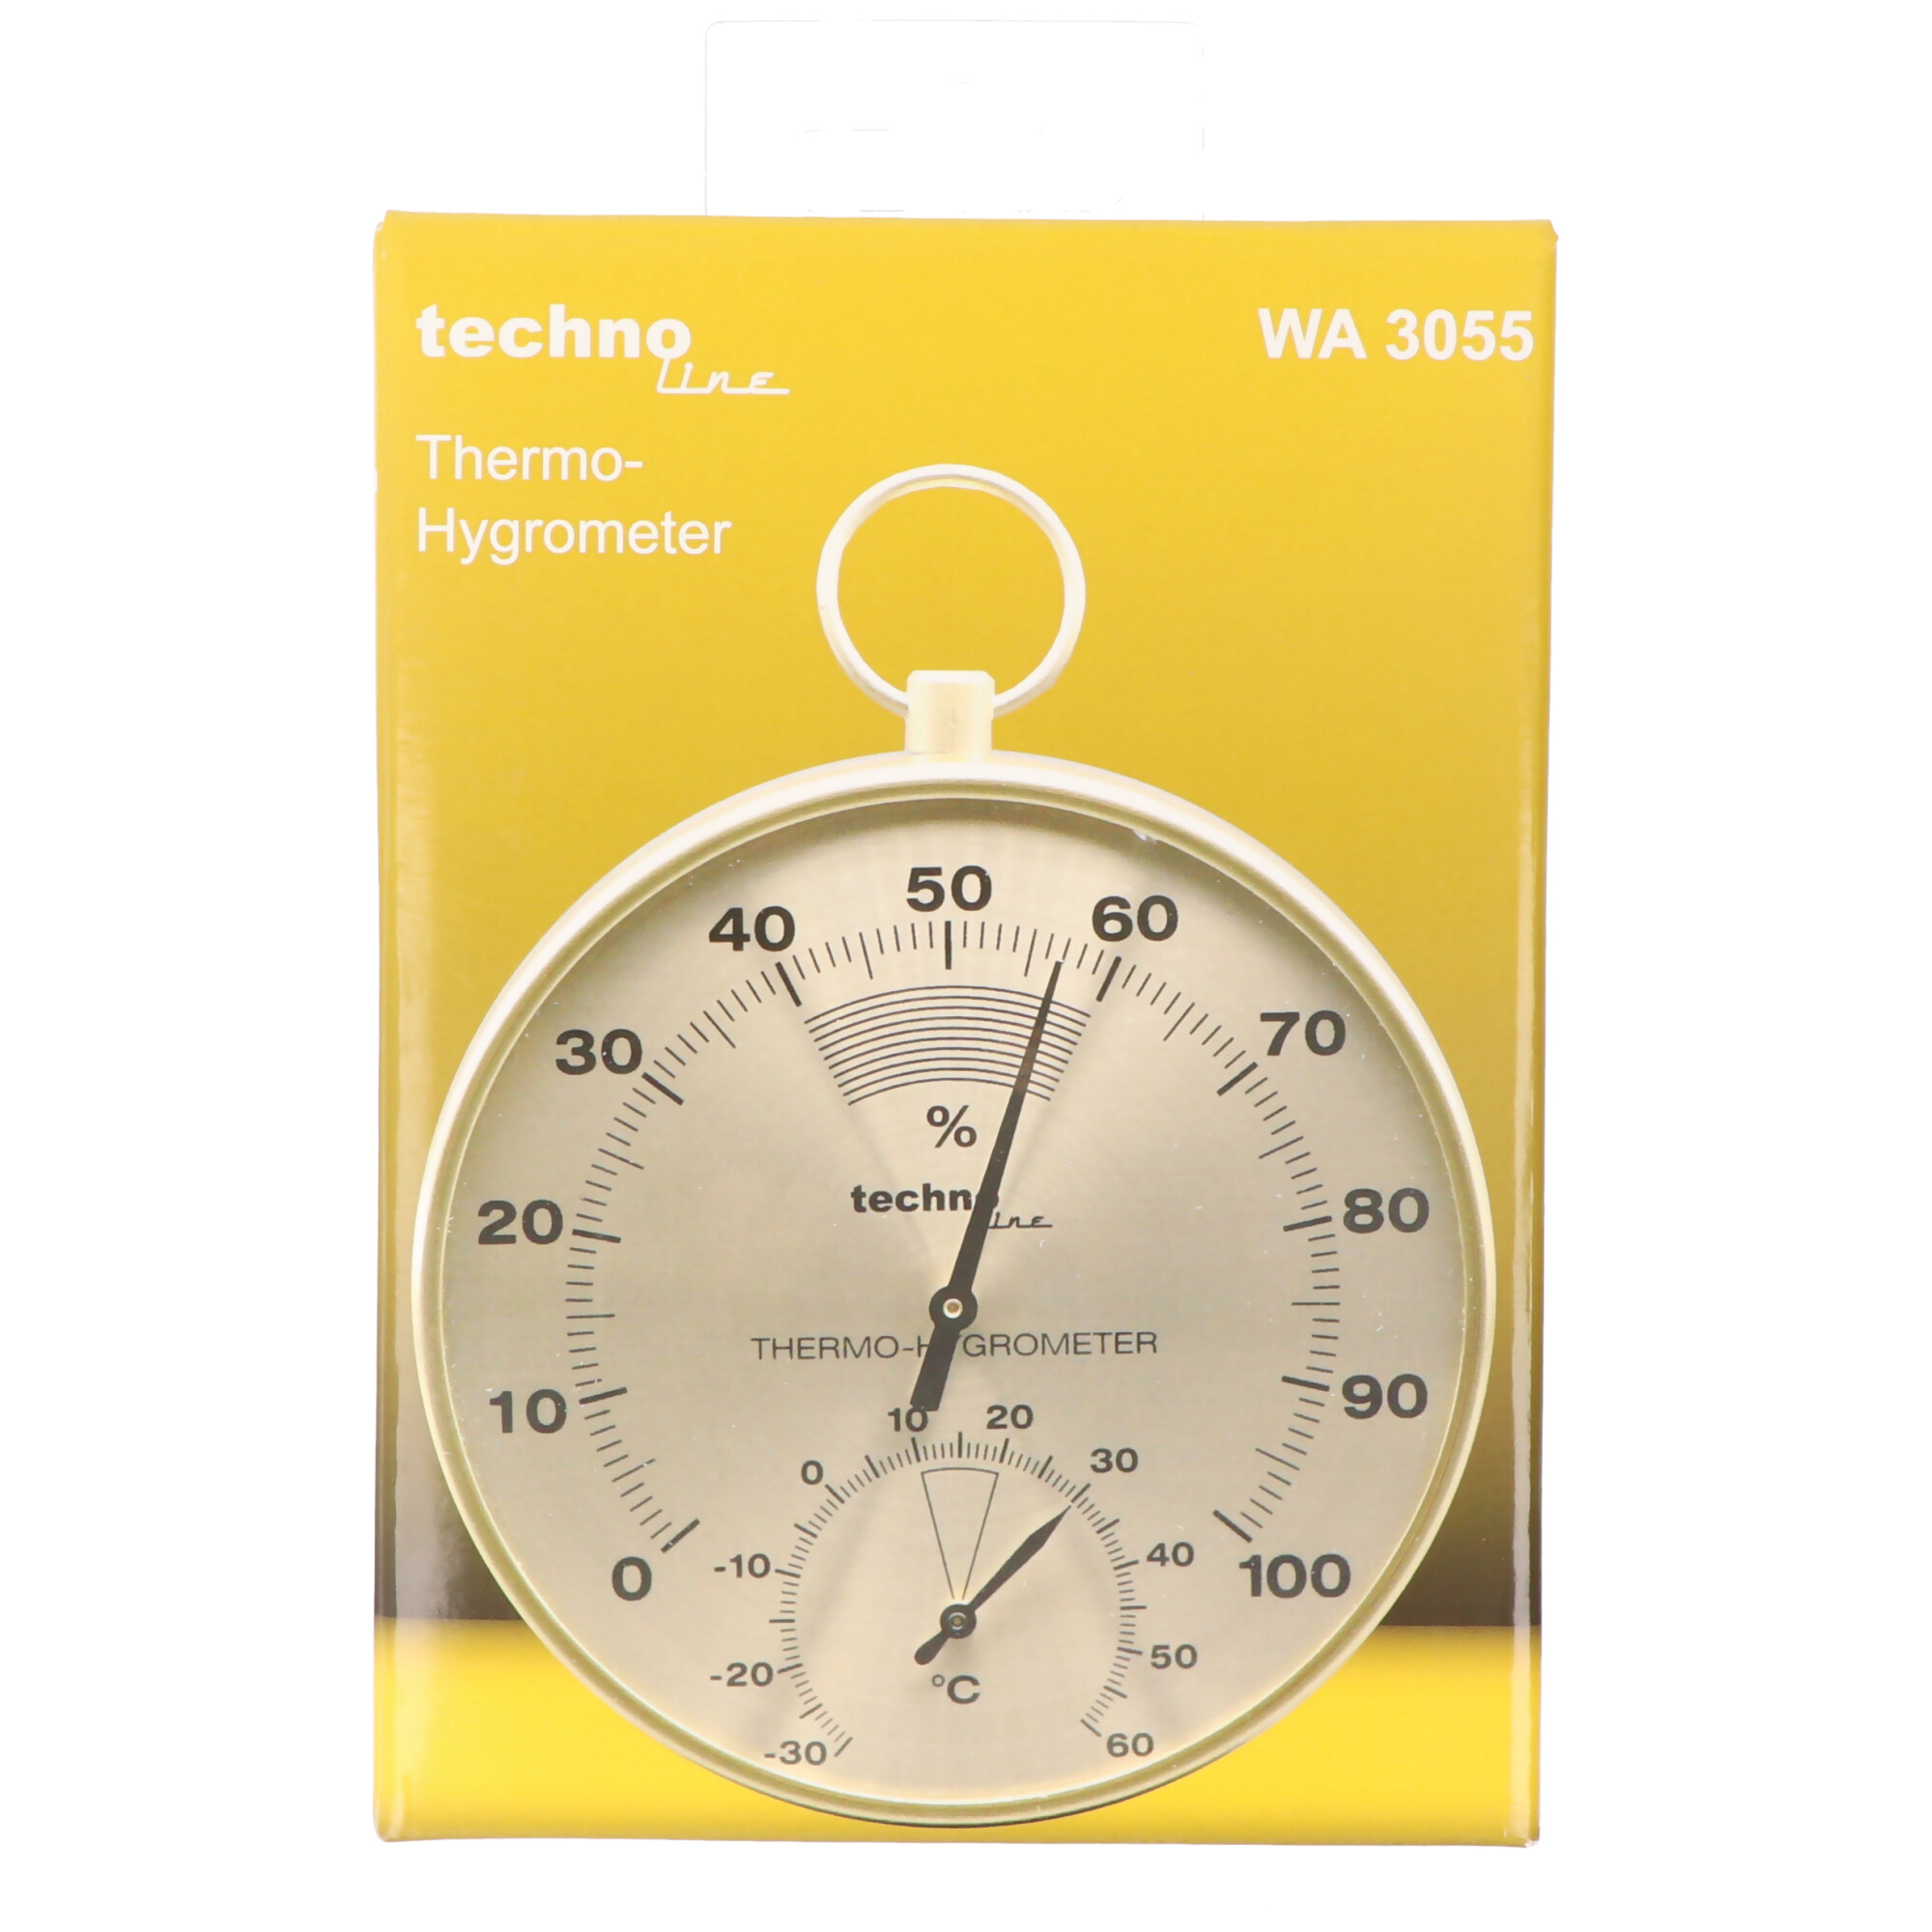 Technoline WA 3055 - edles Thermo-HygroMeter im Messing Design